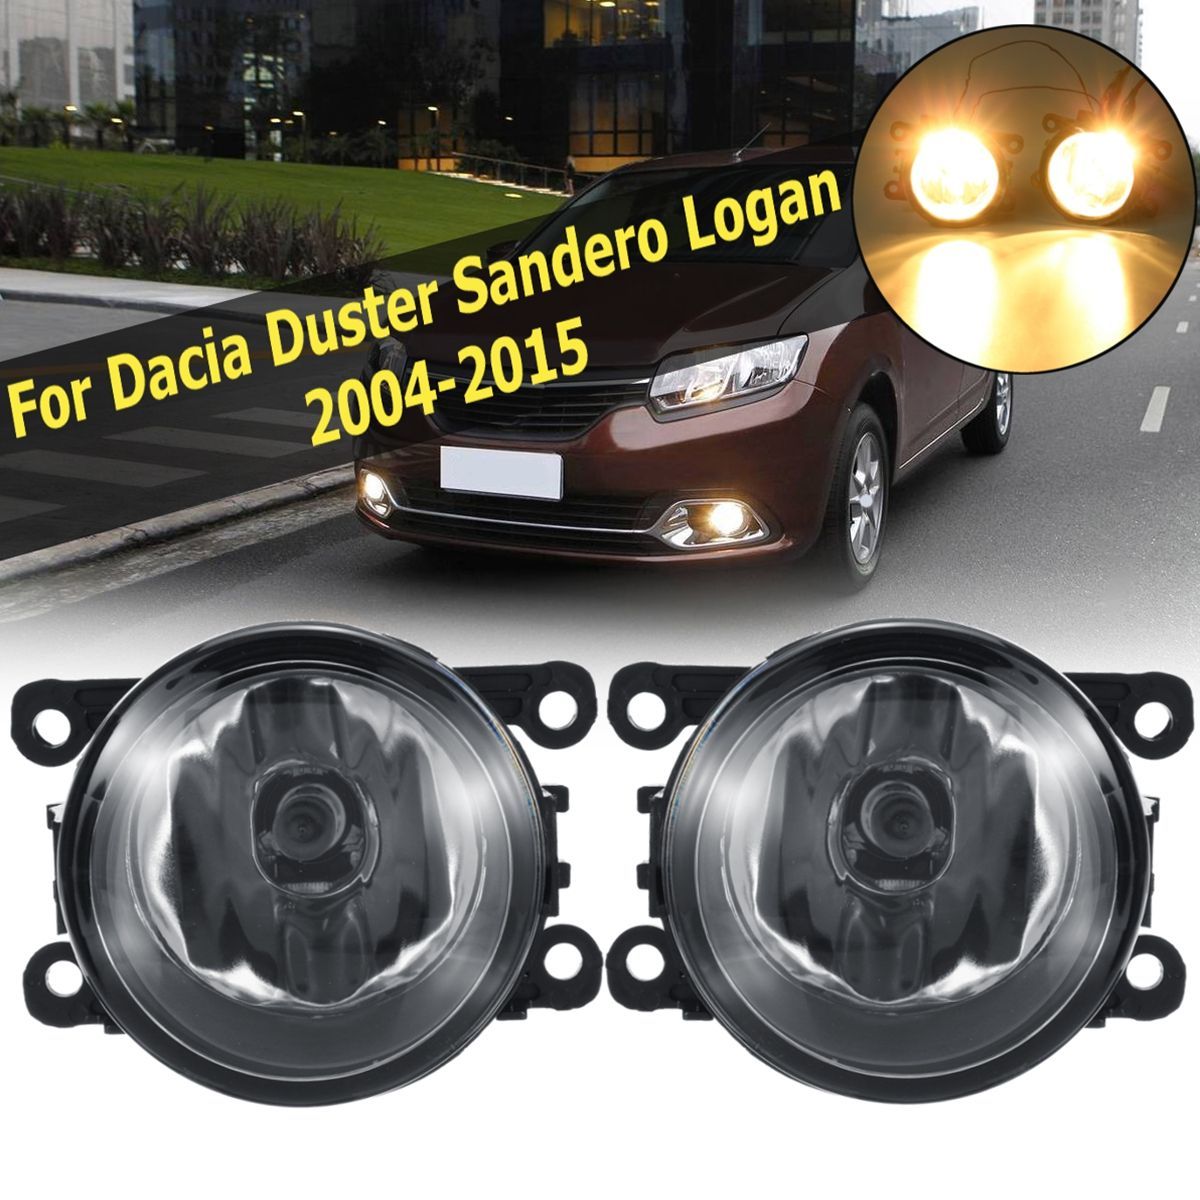 Car-Front-Bumper-Fog-Lights-with-H11-Halogen-Lamps-Pair-for-Dacia-Duster-Sandero-Logan-2004-2015-1482669